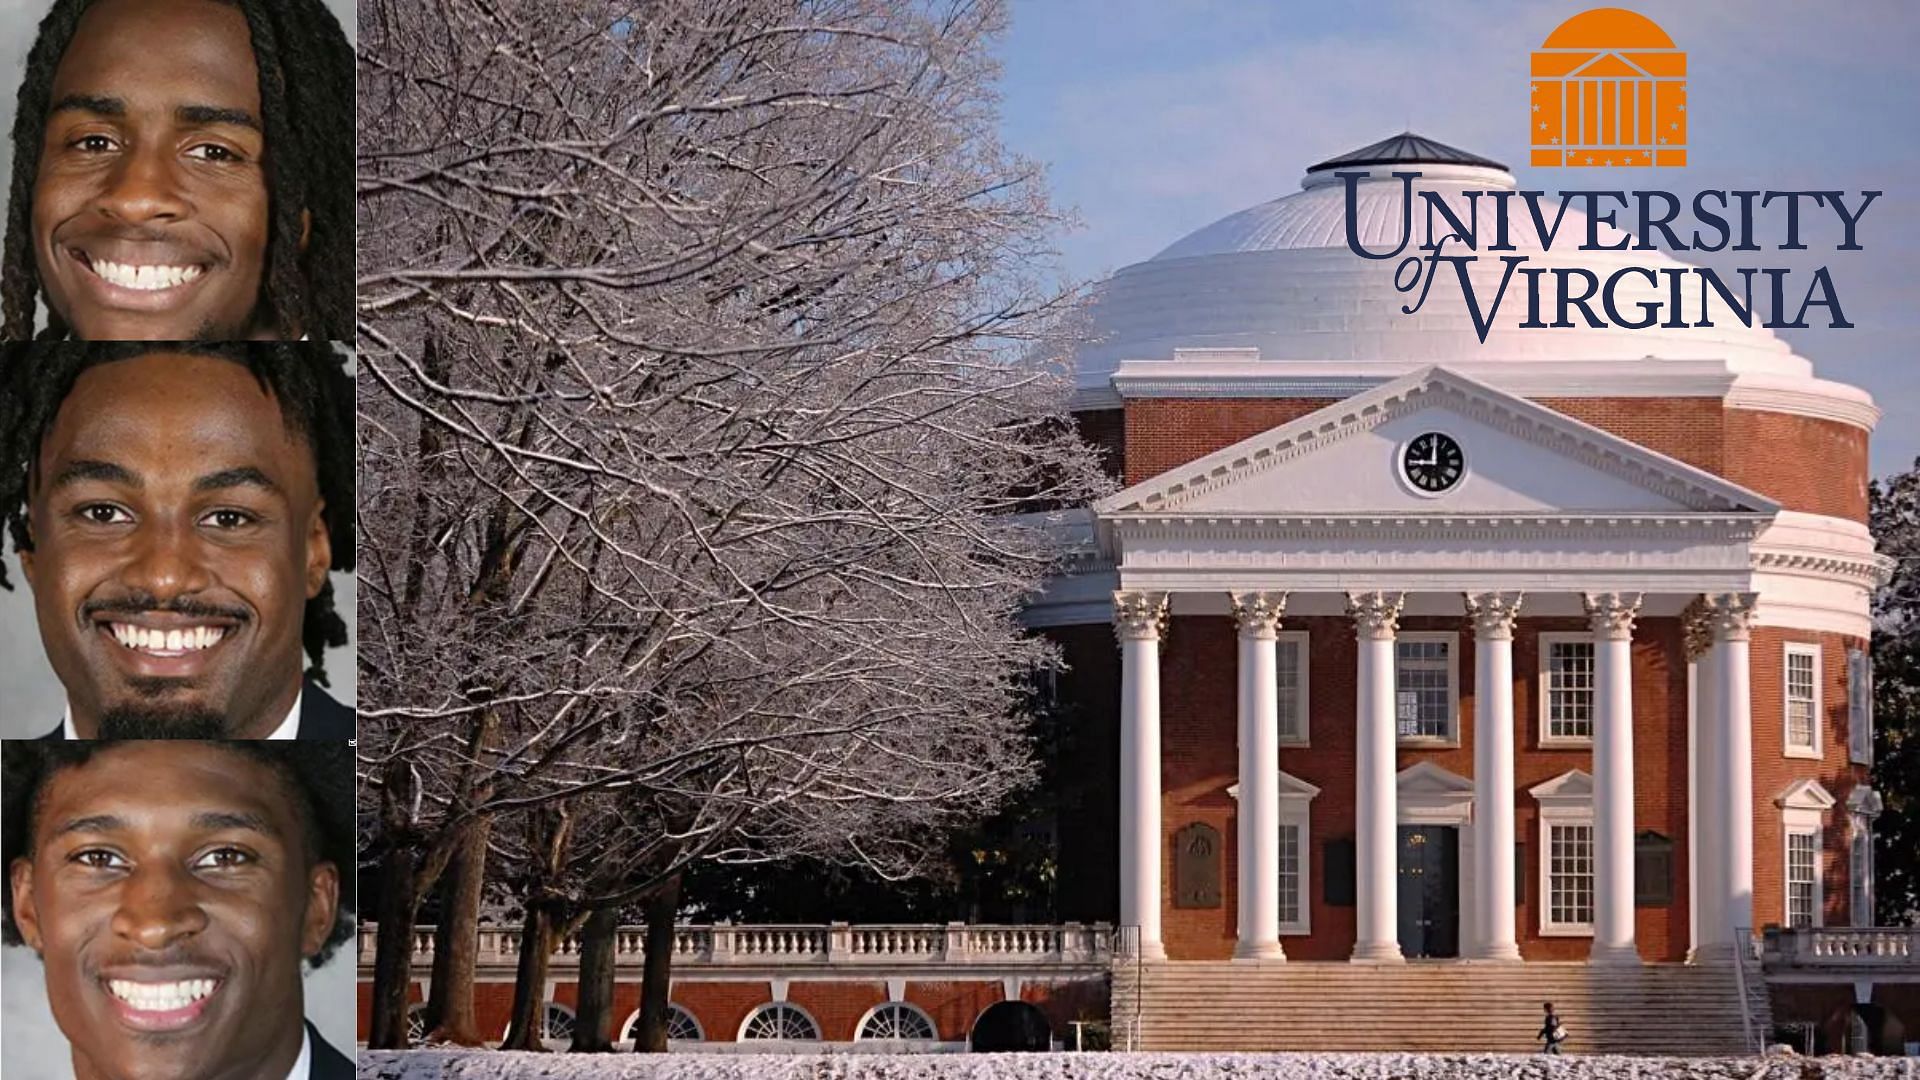 Three shot dead by fellow student at the University of Virginia (image via UVA)